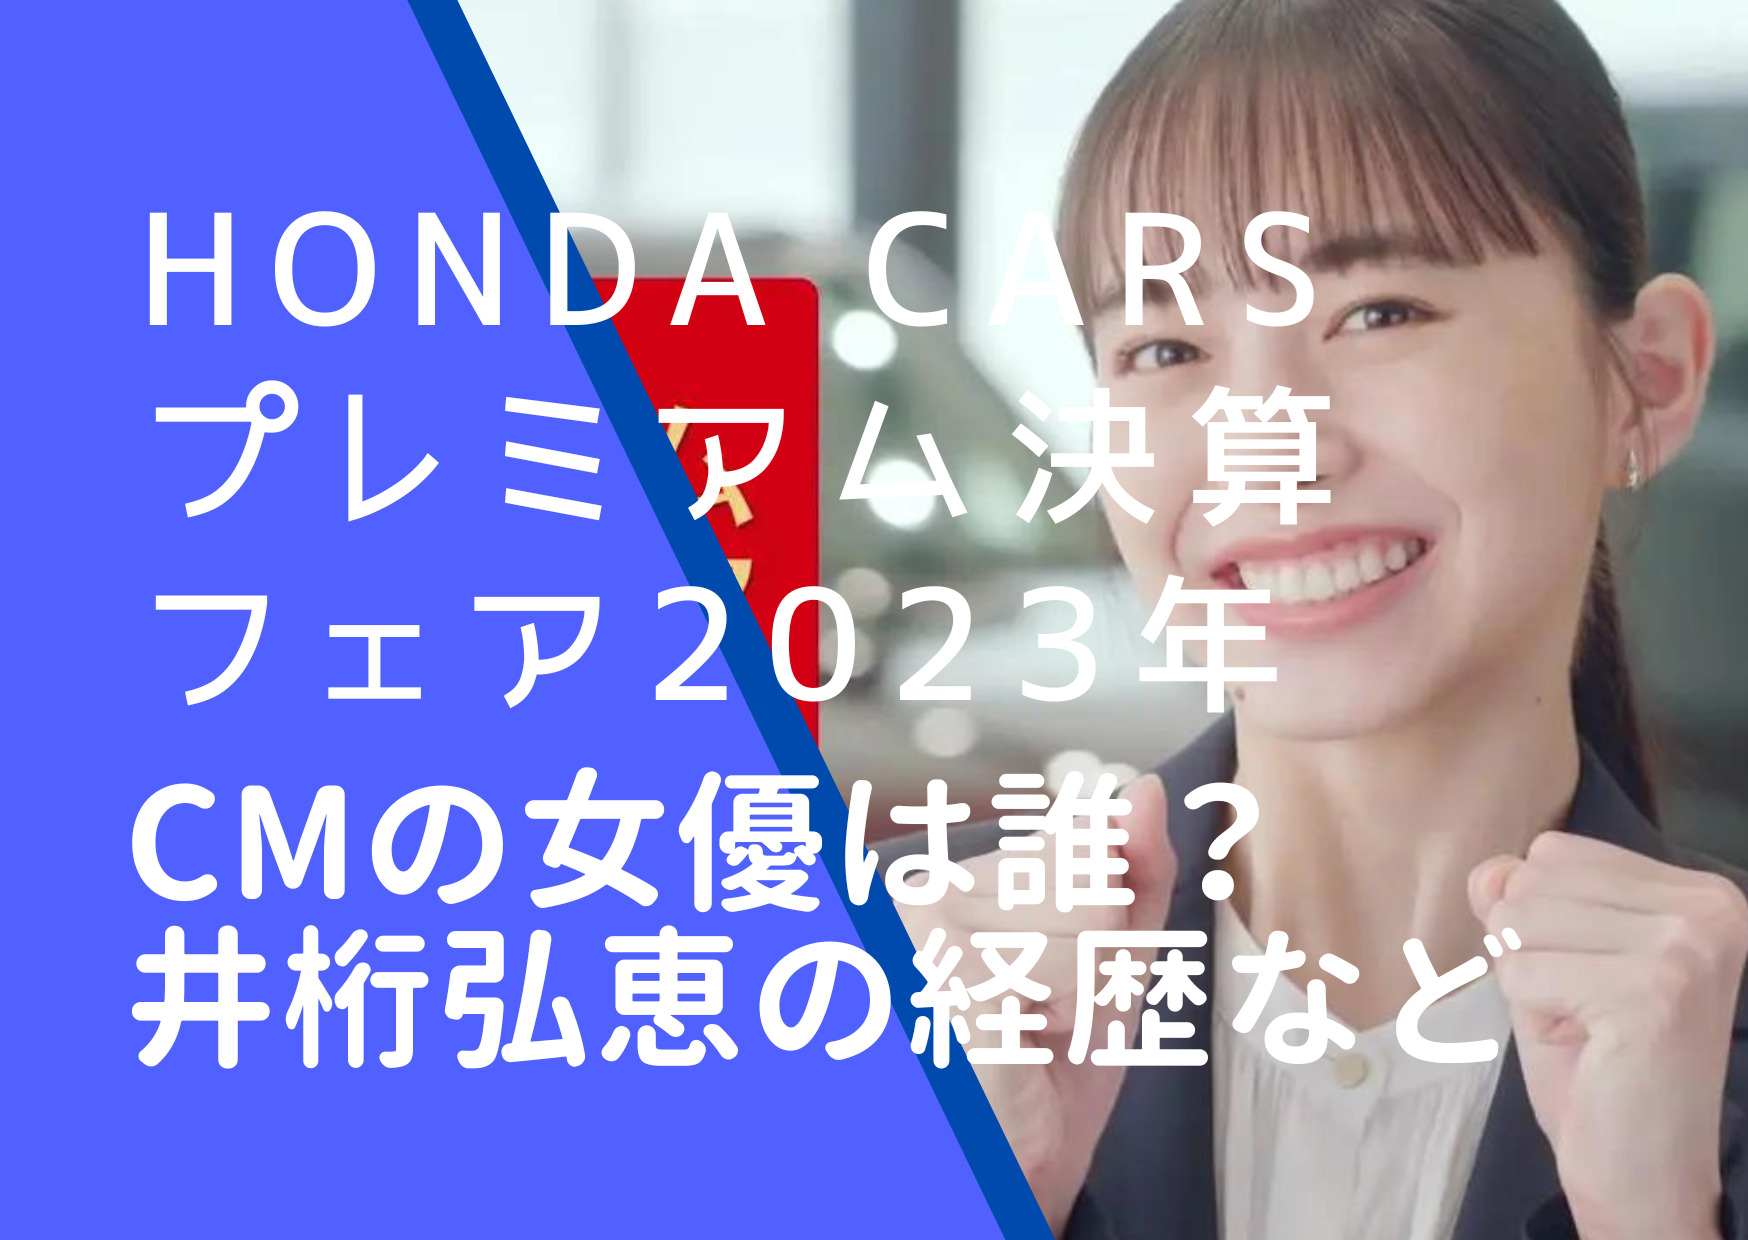 Honda Cars プレミアム決算フェアの2023年CMに出ている井桁弘恵の画像